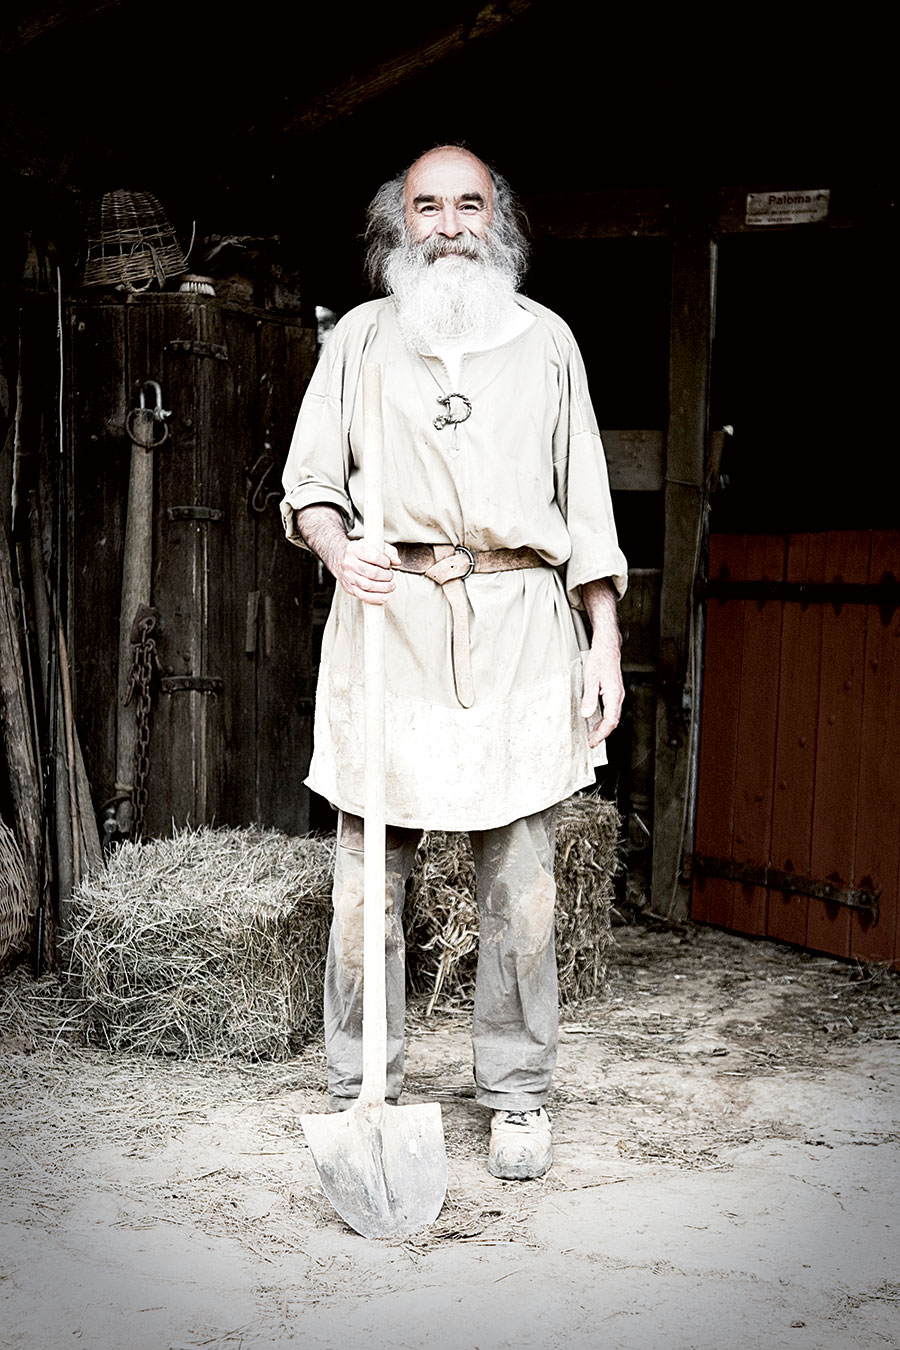 Philippe Delage (59) stonemason at Guedelon